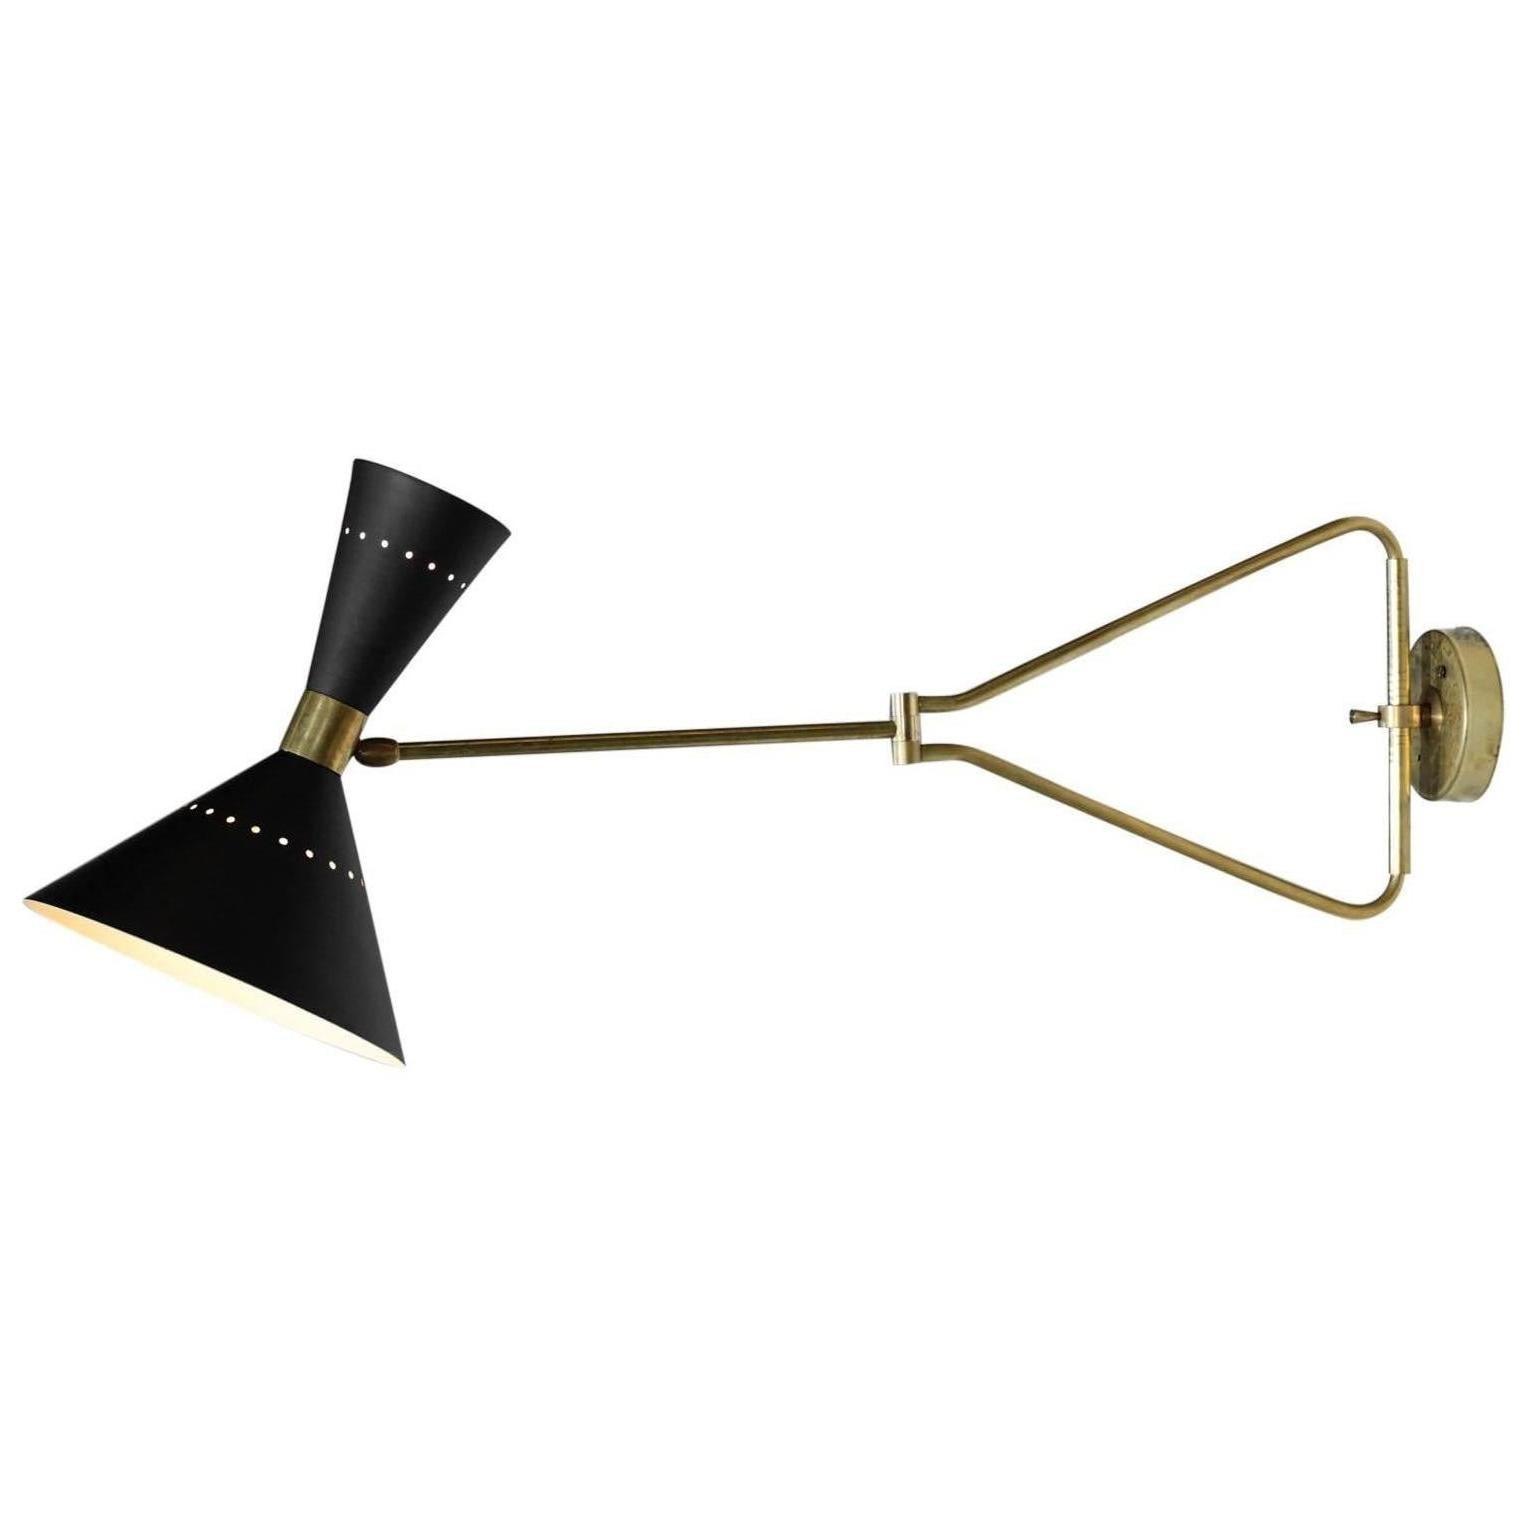 Italian Adjustable Wall Light "Rafaela" Black Modern Brass For Sale